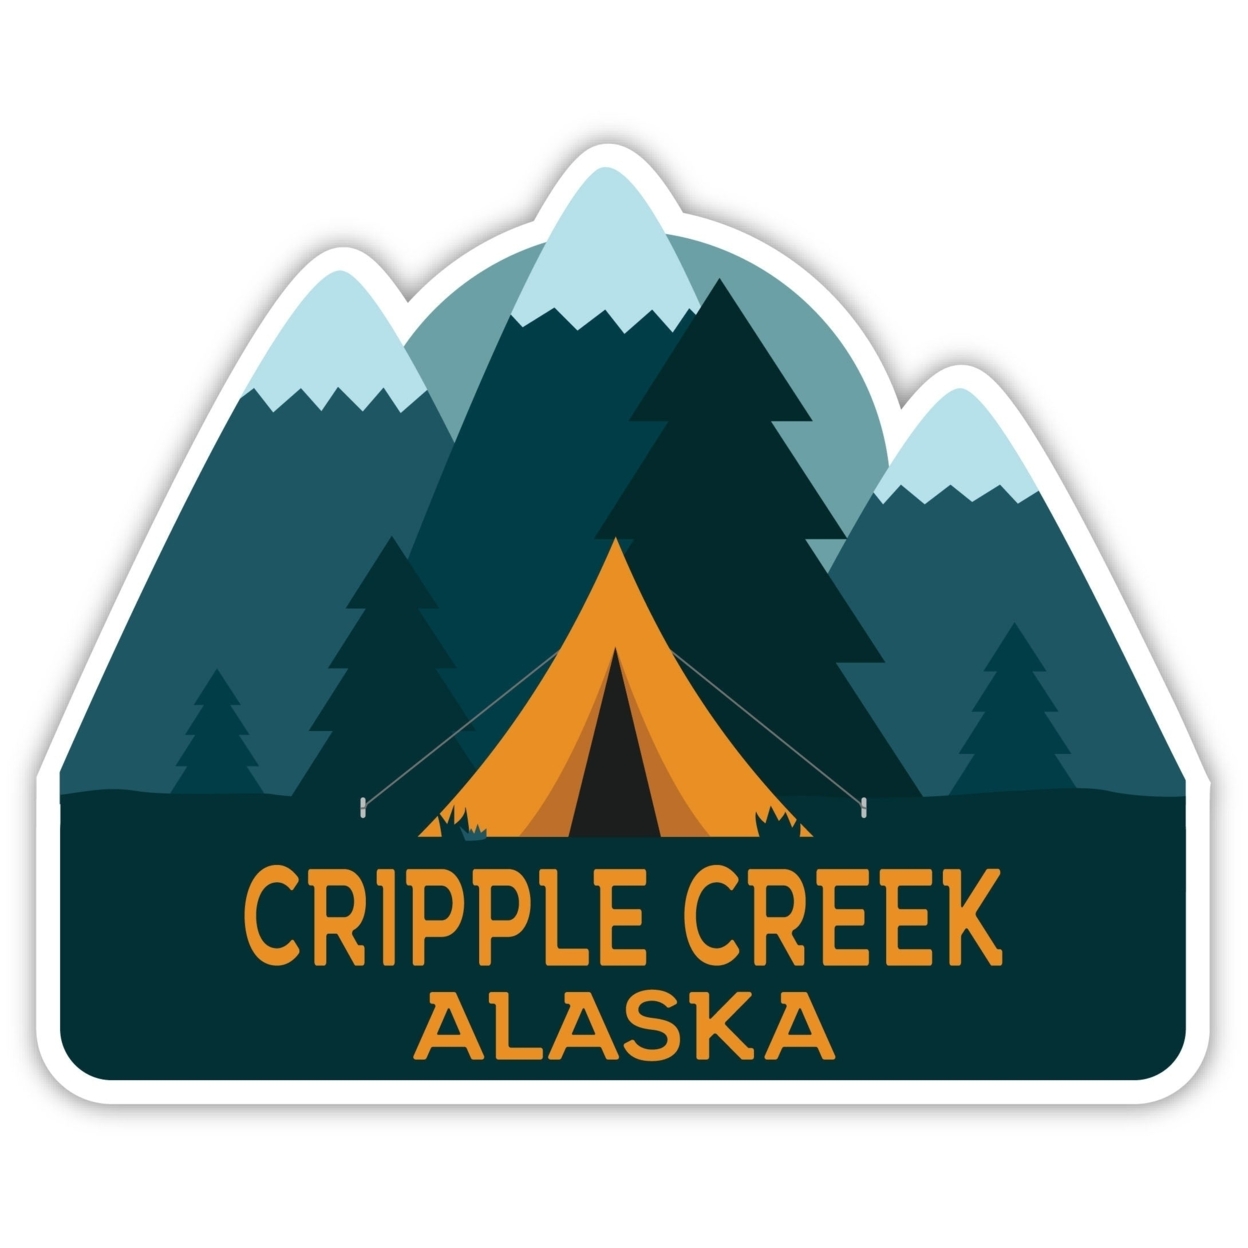 Cripple Creek Alaska Souvenir Decorative Stickers (Choose Theme And Size) - 4-Pack, 10-Inch, Tent